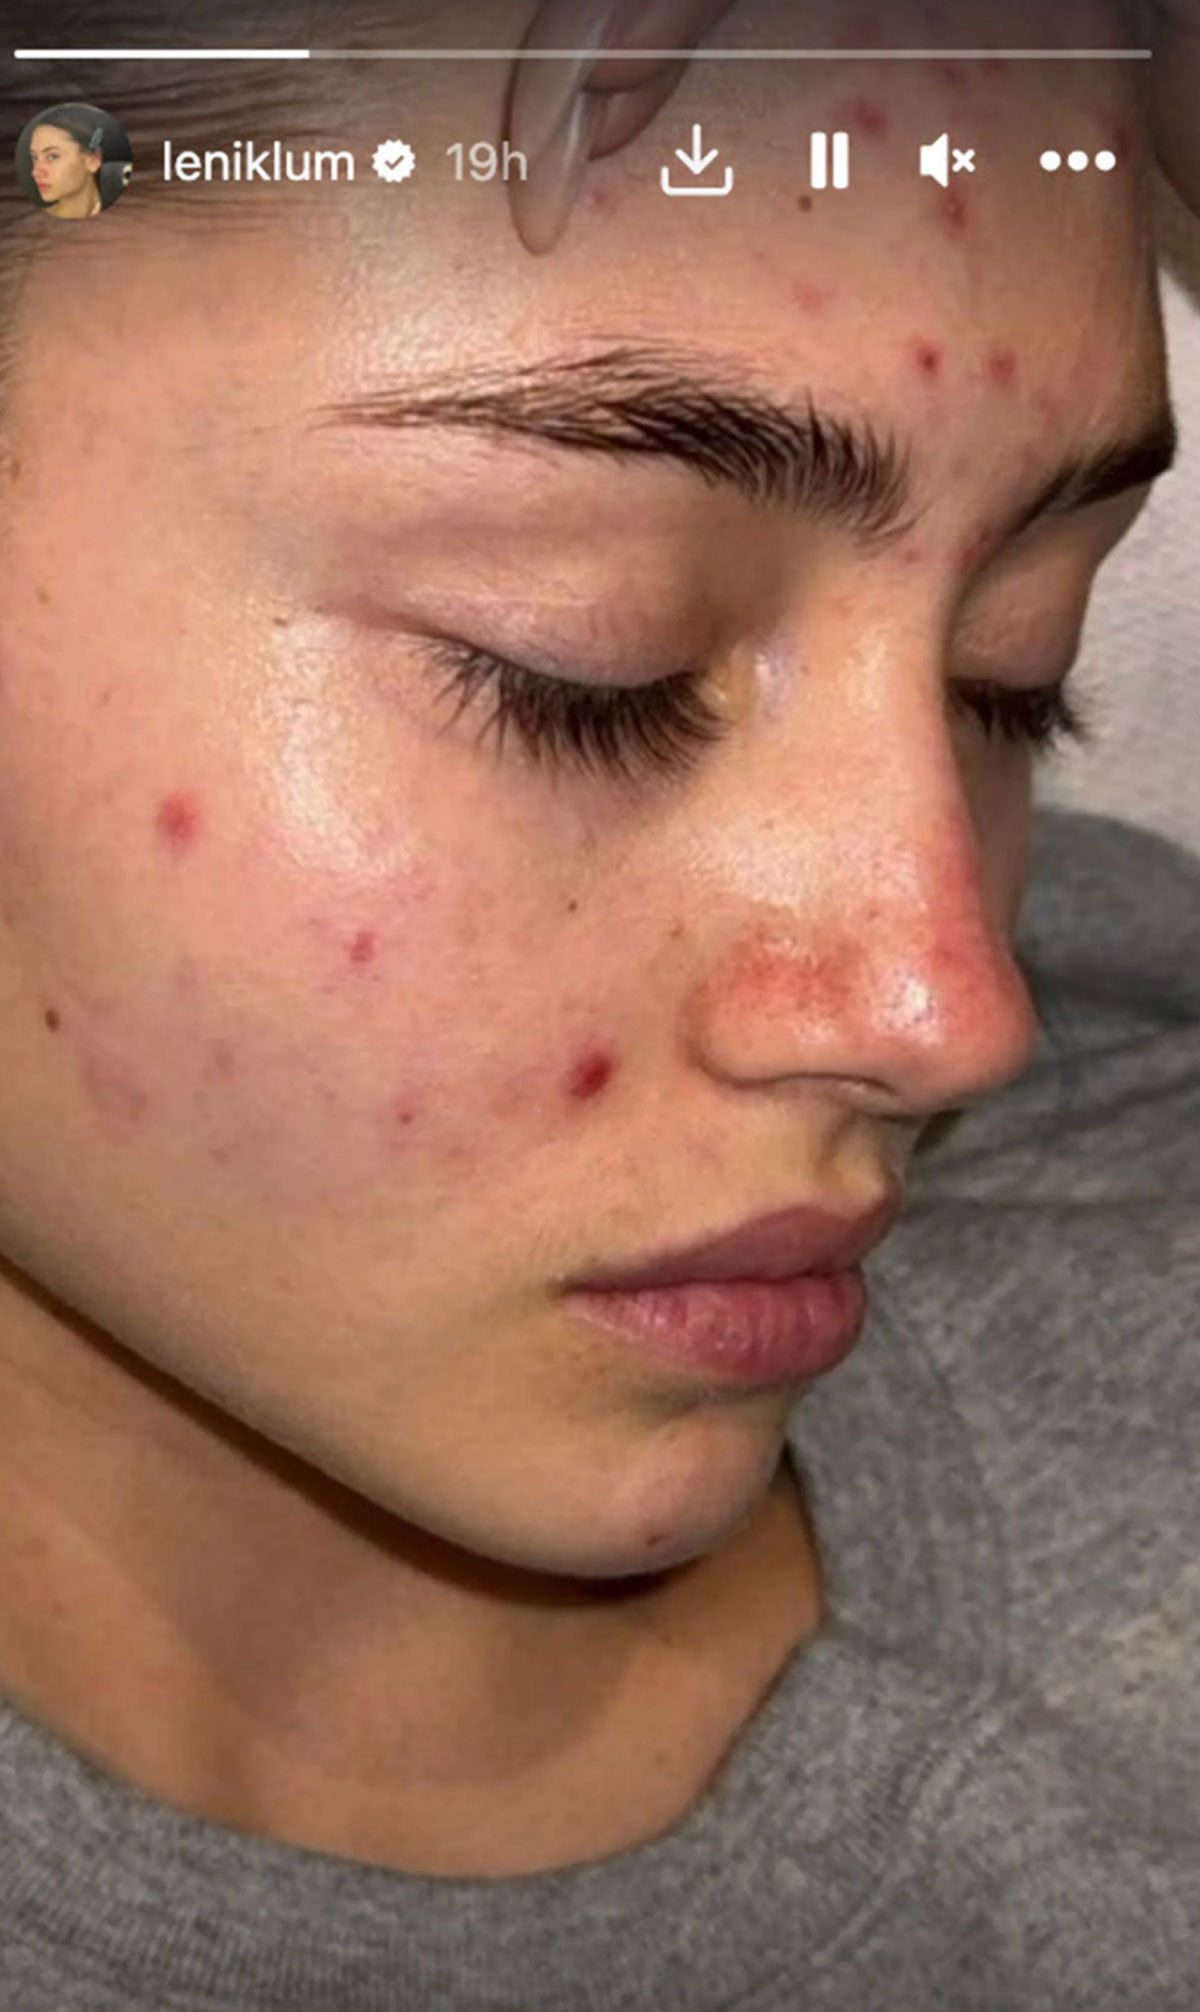 Heidi Klum's Model Daughter Leni Shares Makeup-Free Face Covered In Acne! 